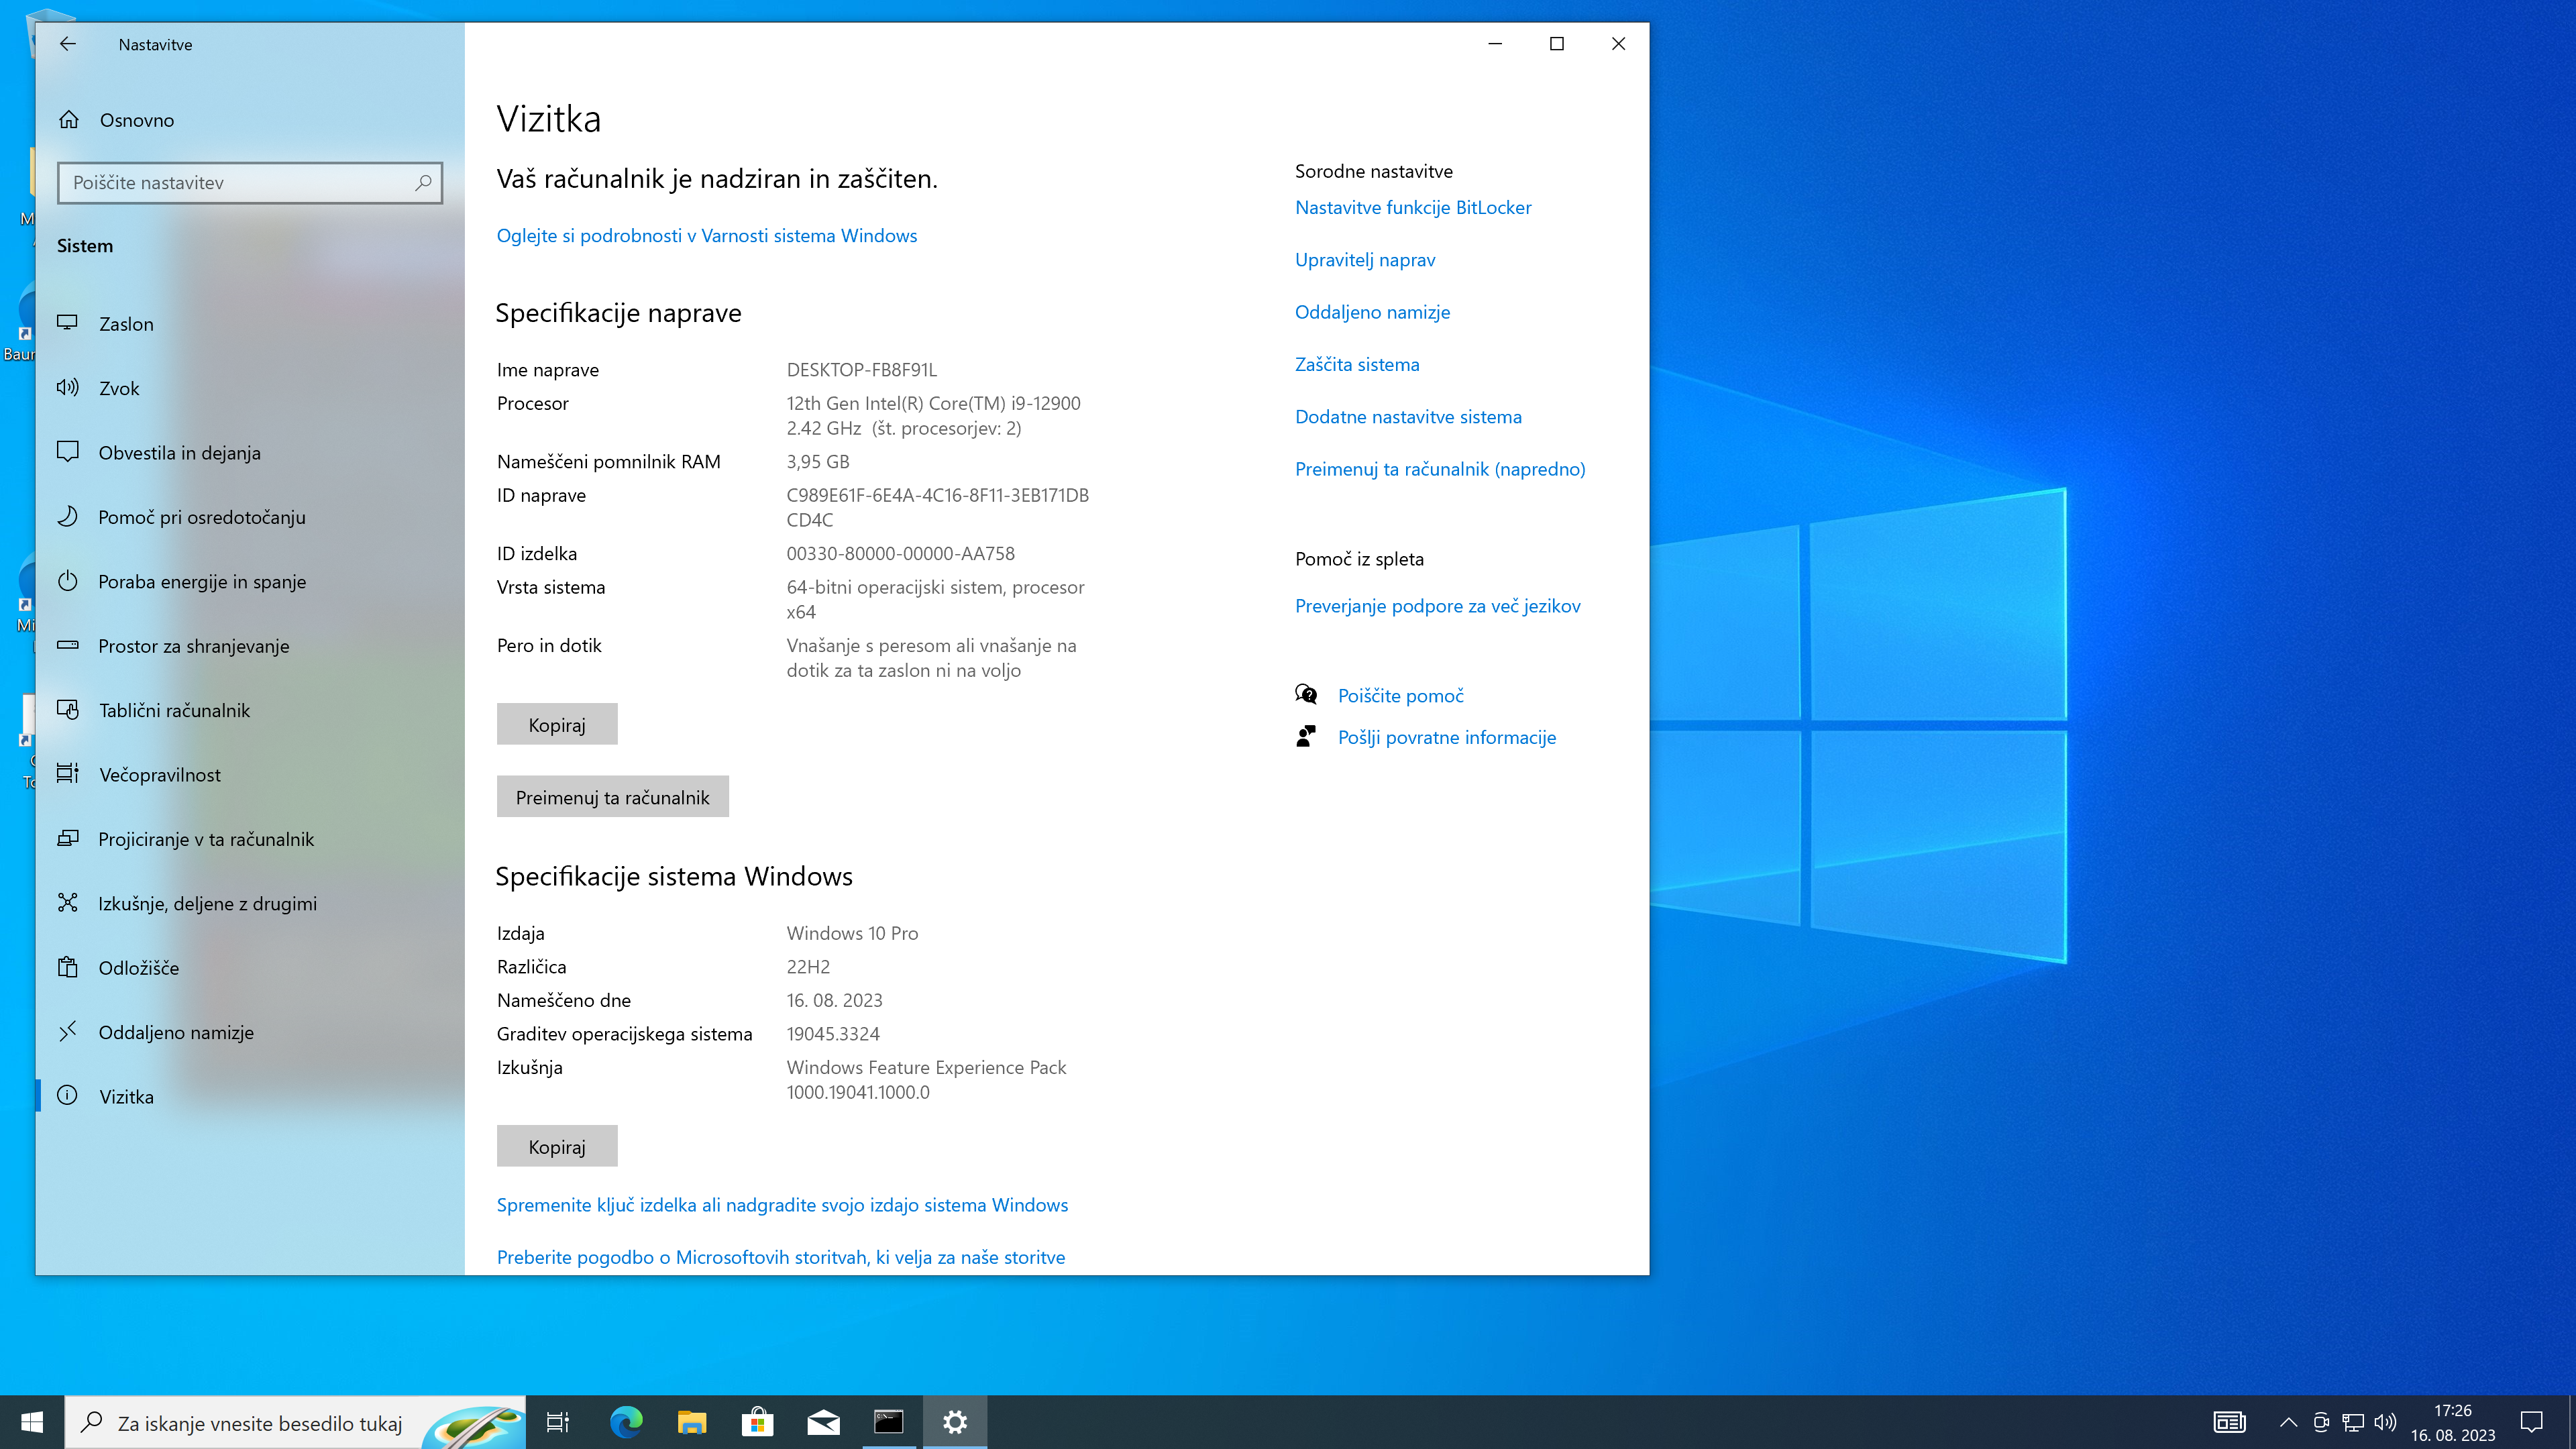 Demo windows. Виндовс 10. Обновление Windows 10. Windows 10 Pro. Виндовс 10 20h2.